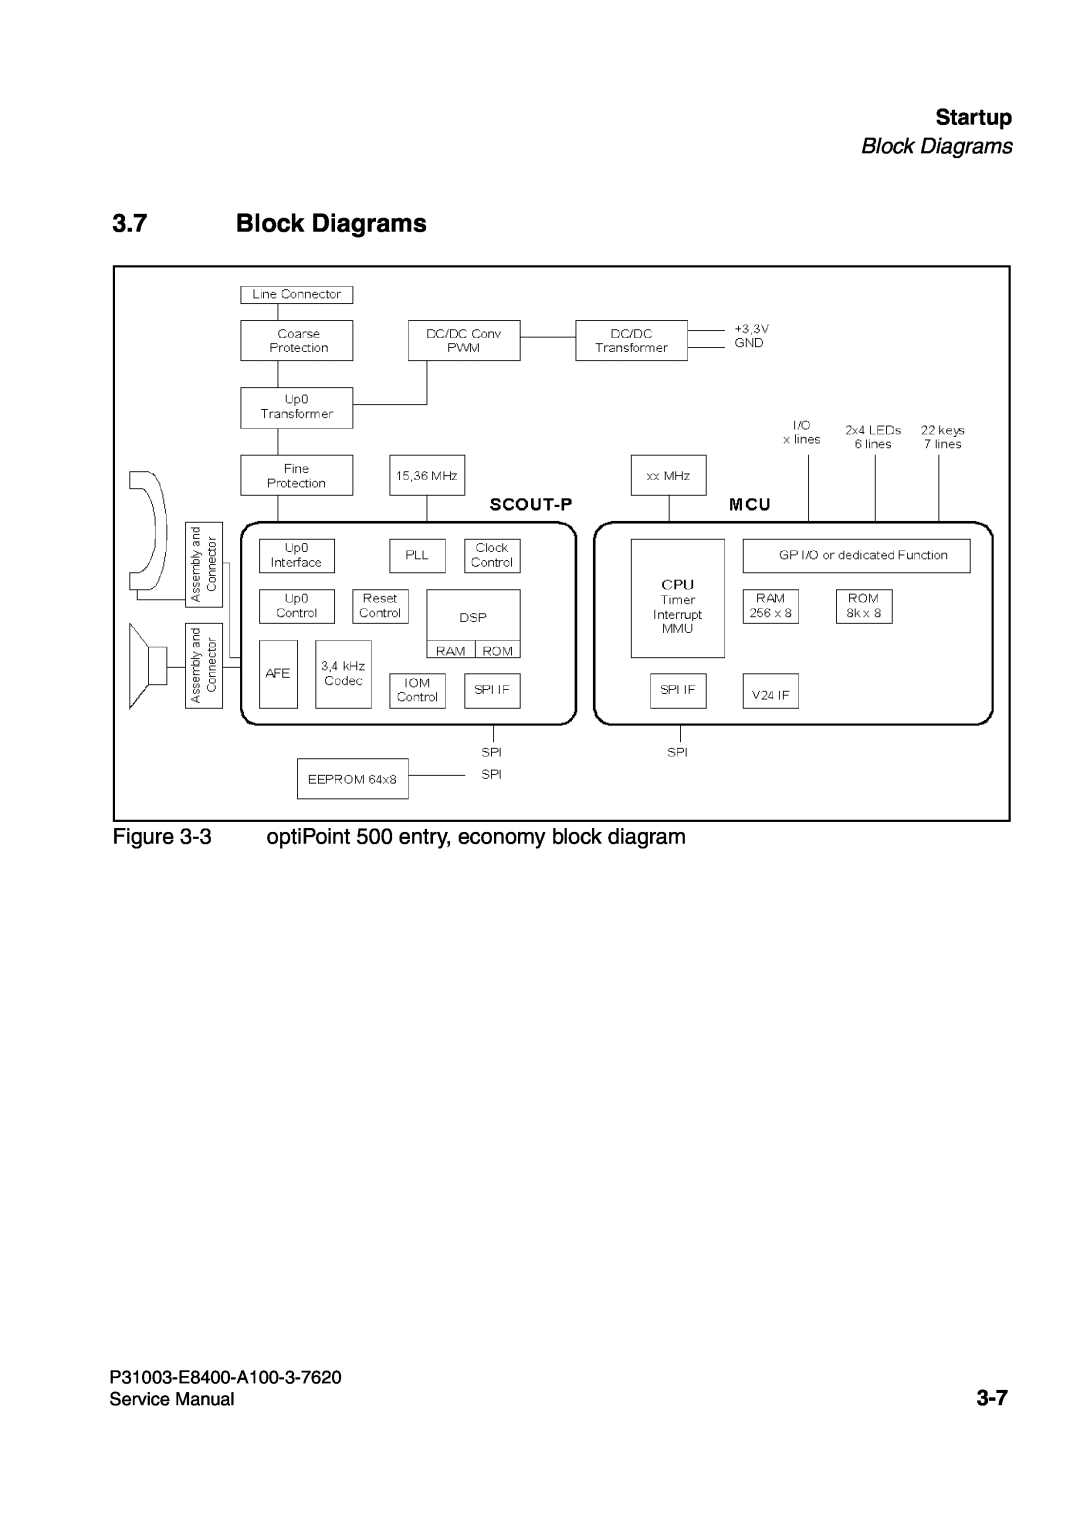 Siemens service manual Block Diagrams, Startup, 3 optiPoint 500 entry, economy block diagram 